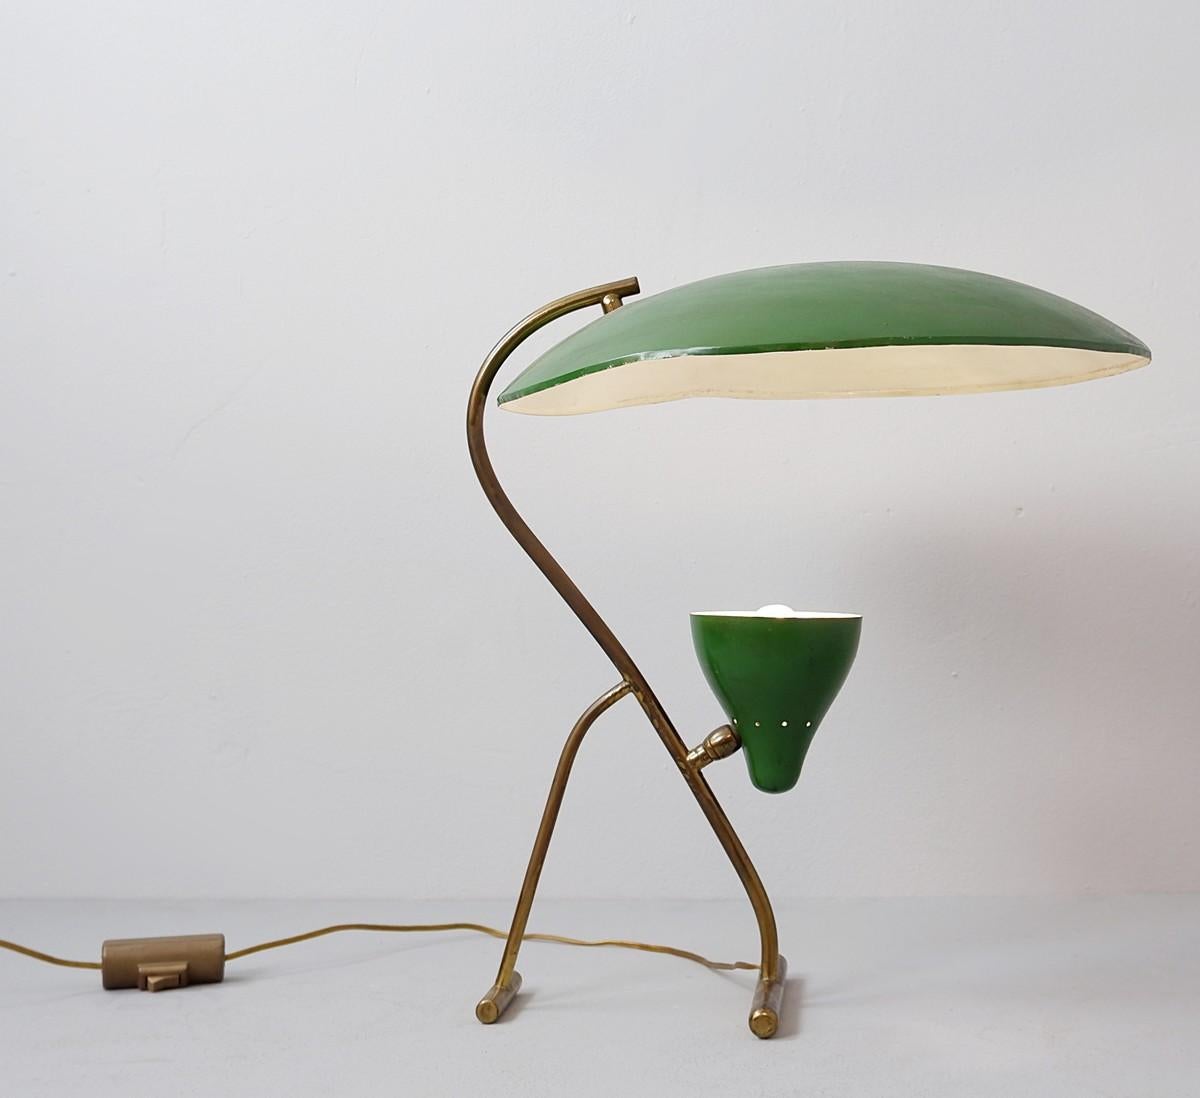 Italian desk lamp - 1950s.